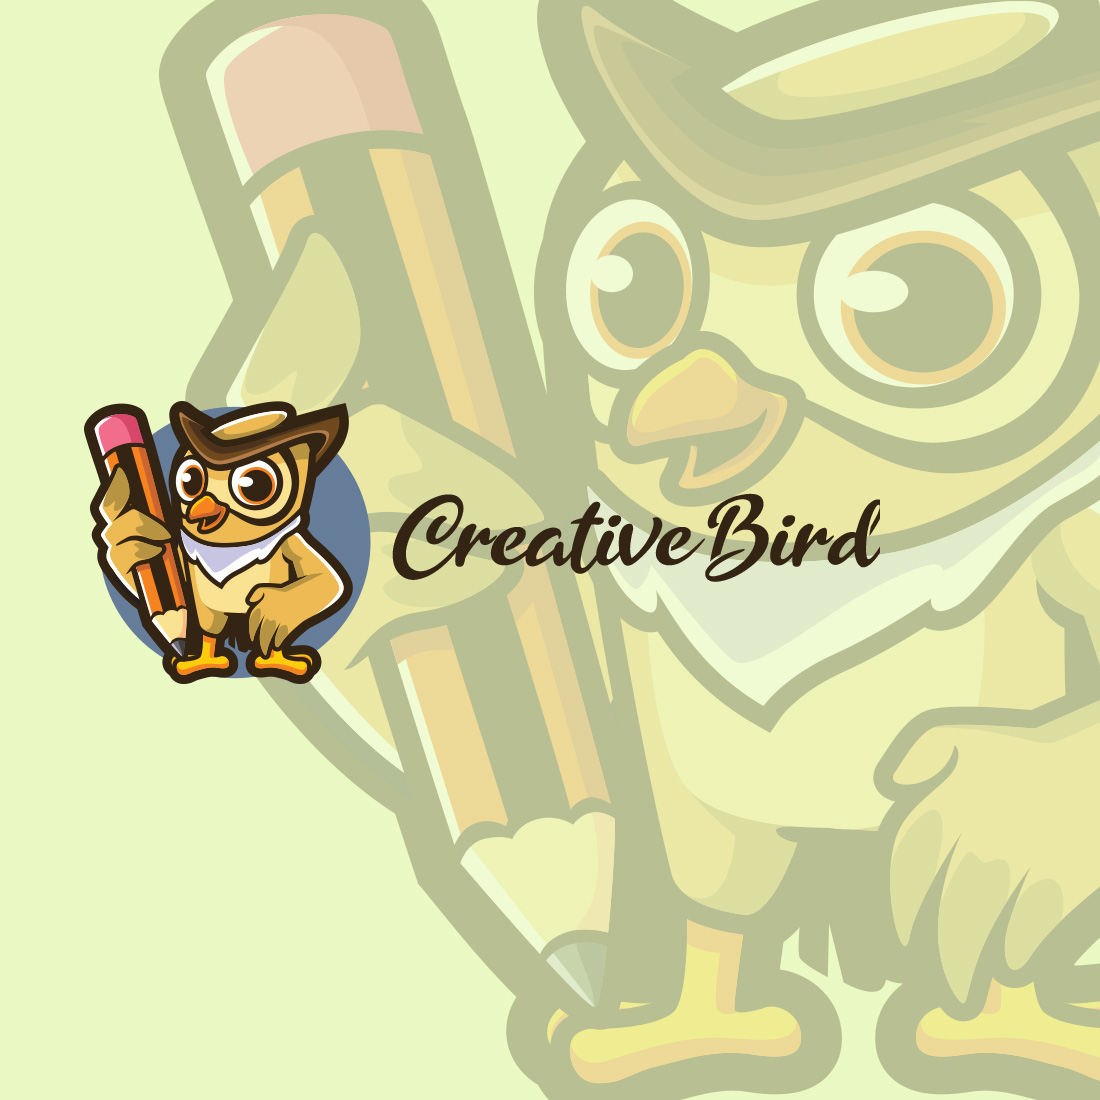 Creative Bird - Owl Character Mascot Design cover image.